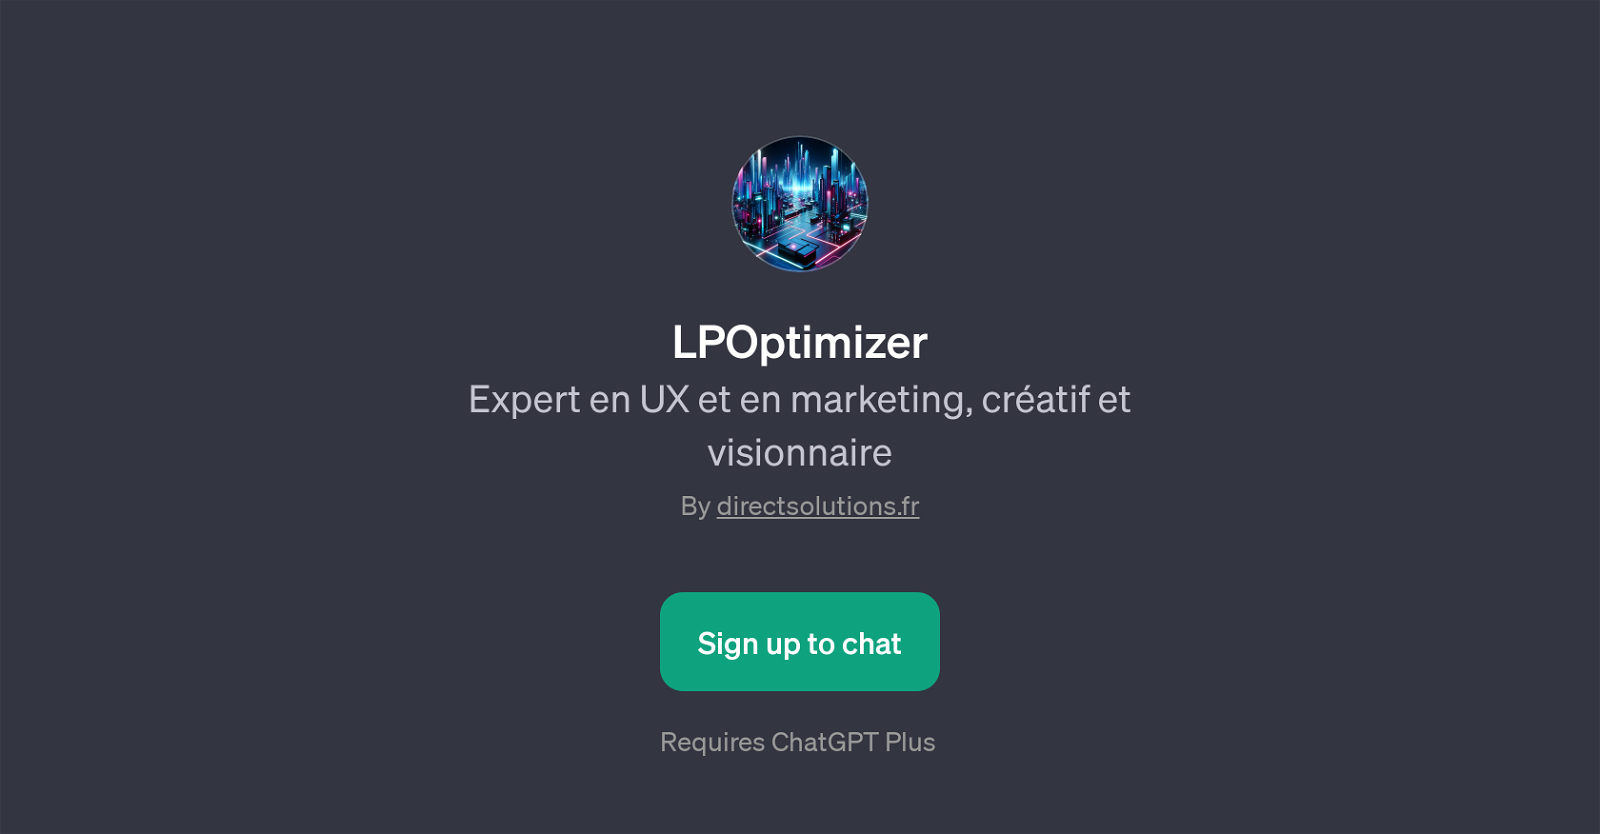 LPOptimizer website